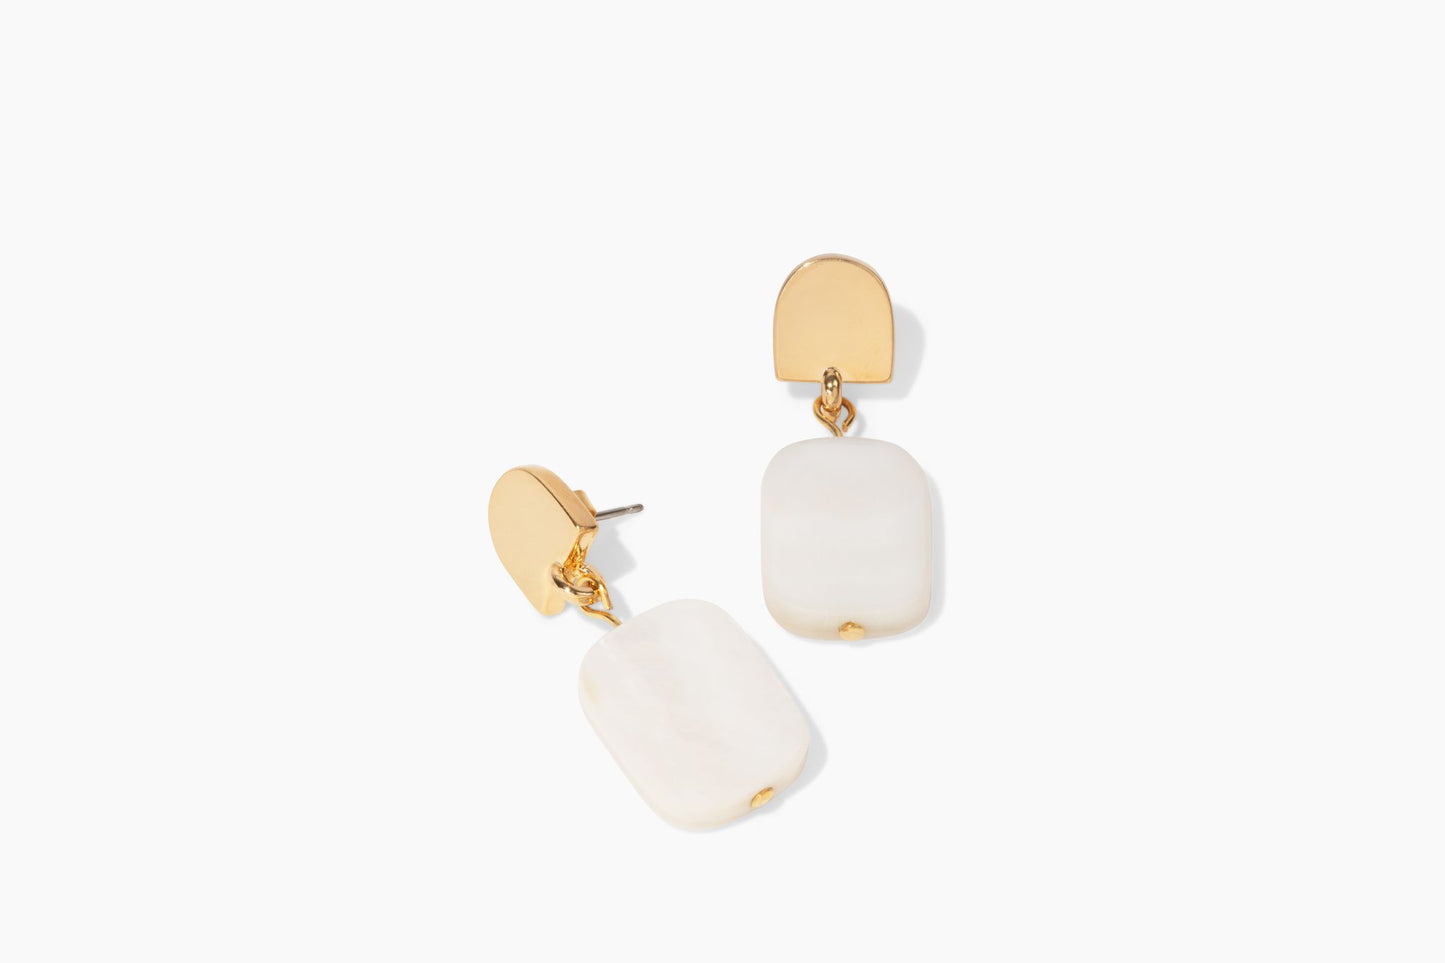 gold dome + mother-of-pearl earrings - Earrings - VUE by SEK